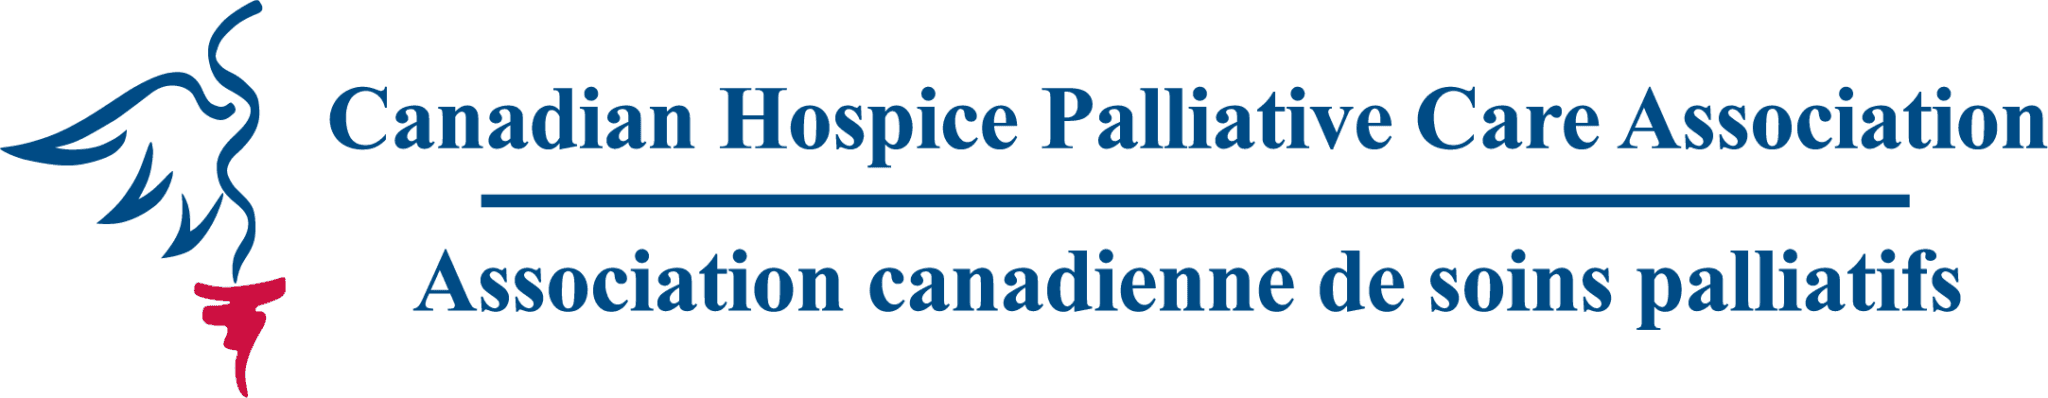 Canadian Hospice Palliative Care Association logo